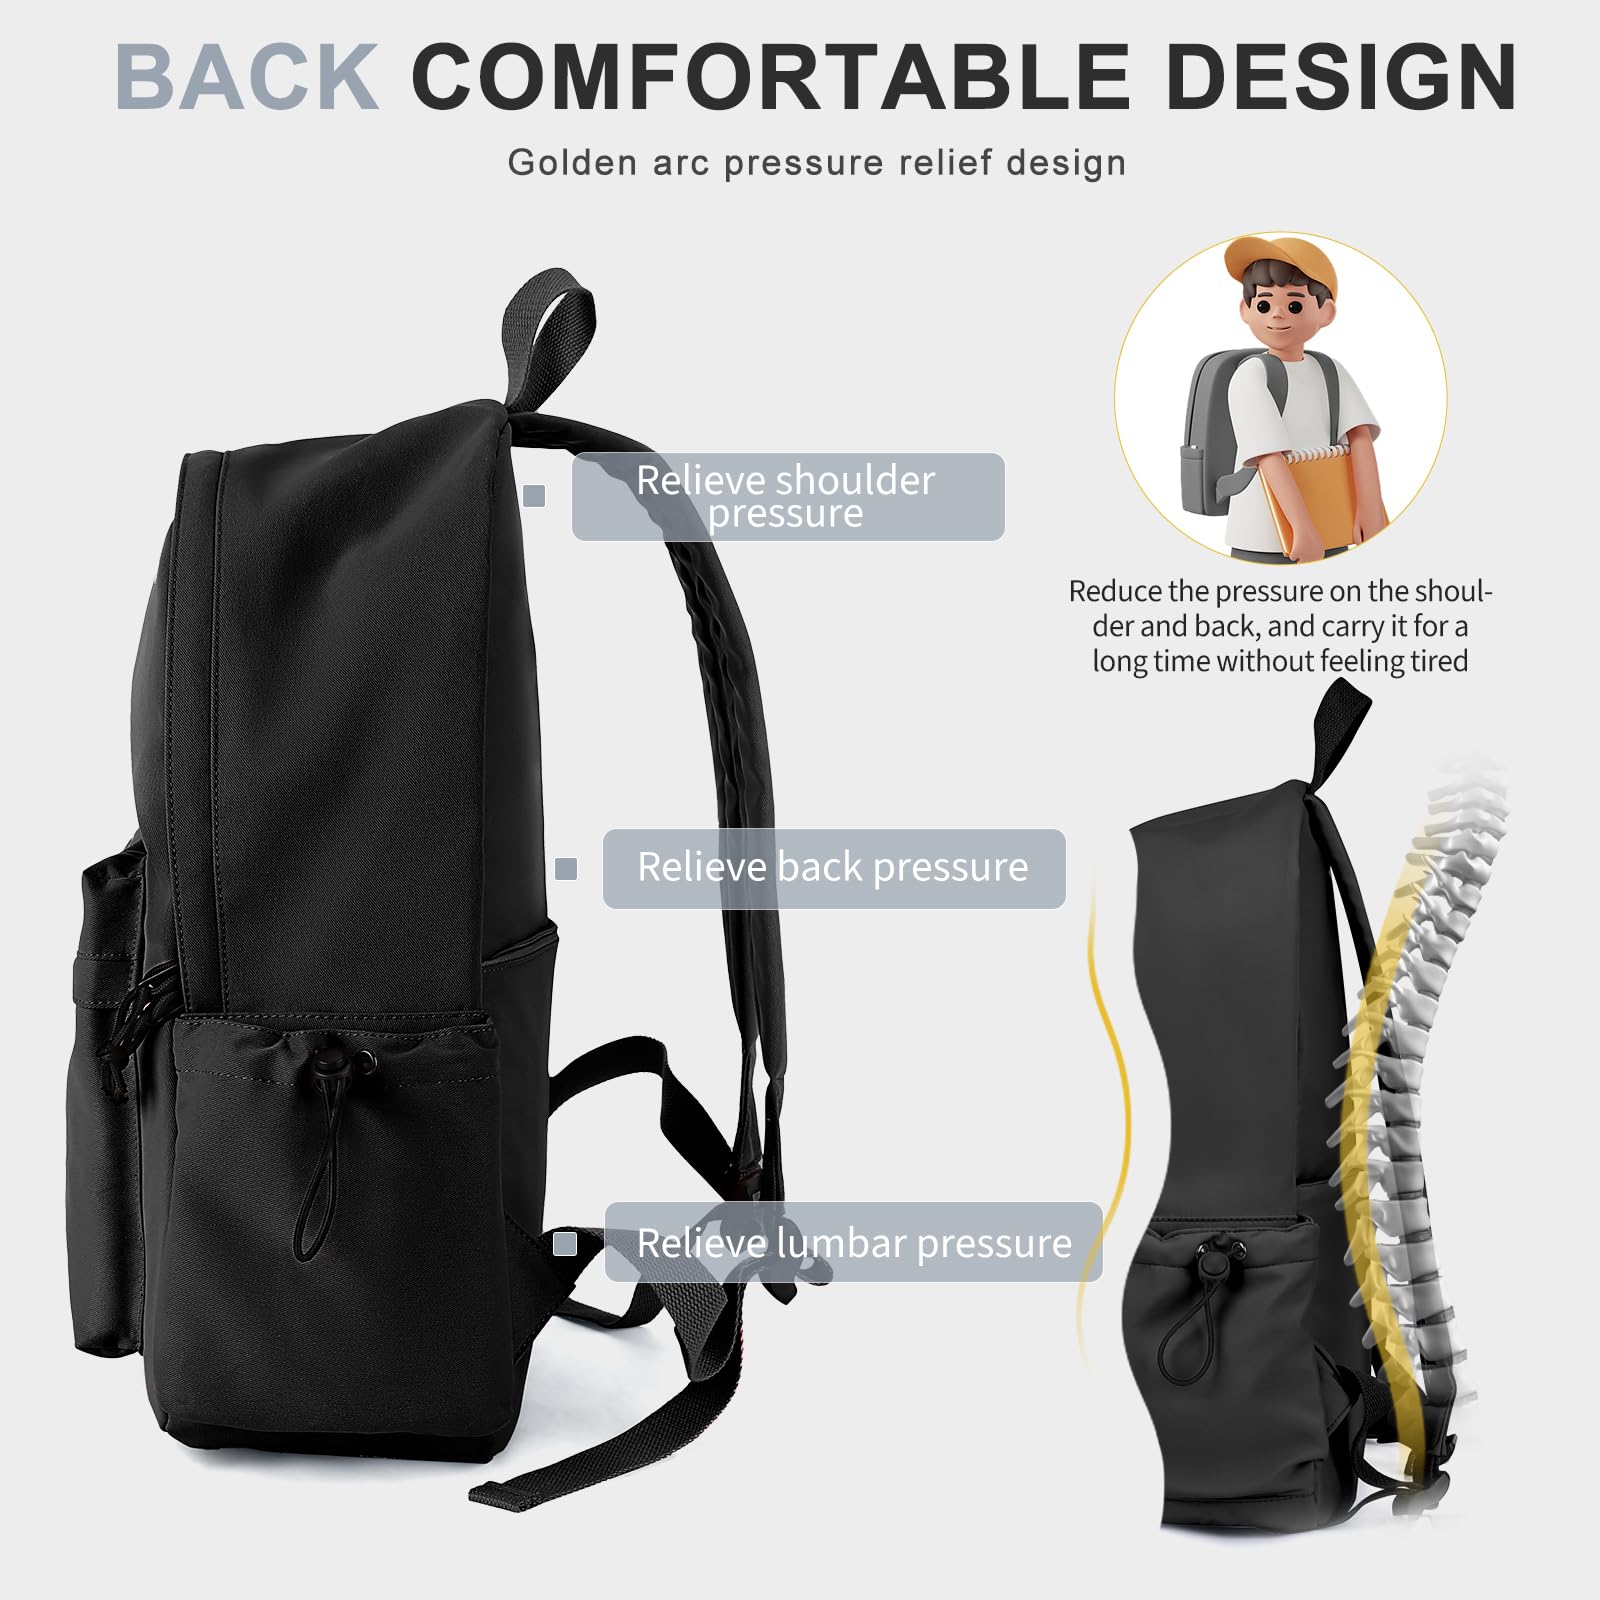 WEPOET Classic Basic Black Backpack For Women,Waterproof High School Bookbag,Lightweight Casual Travel Daypack,College Backpack Men,Middle School Bag For Girls Boys